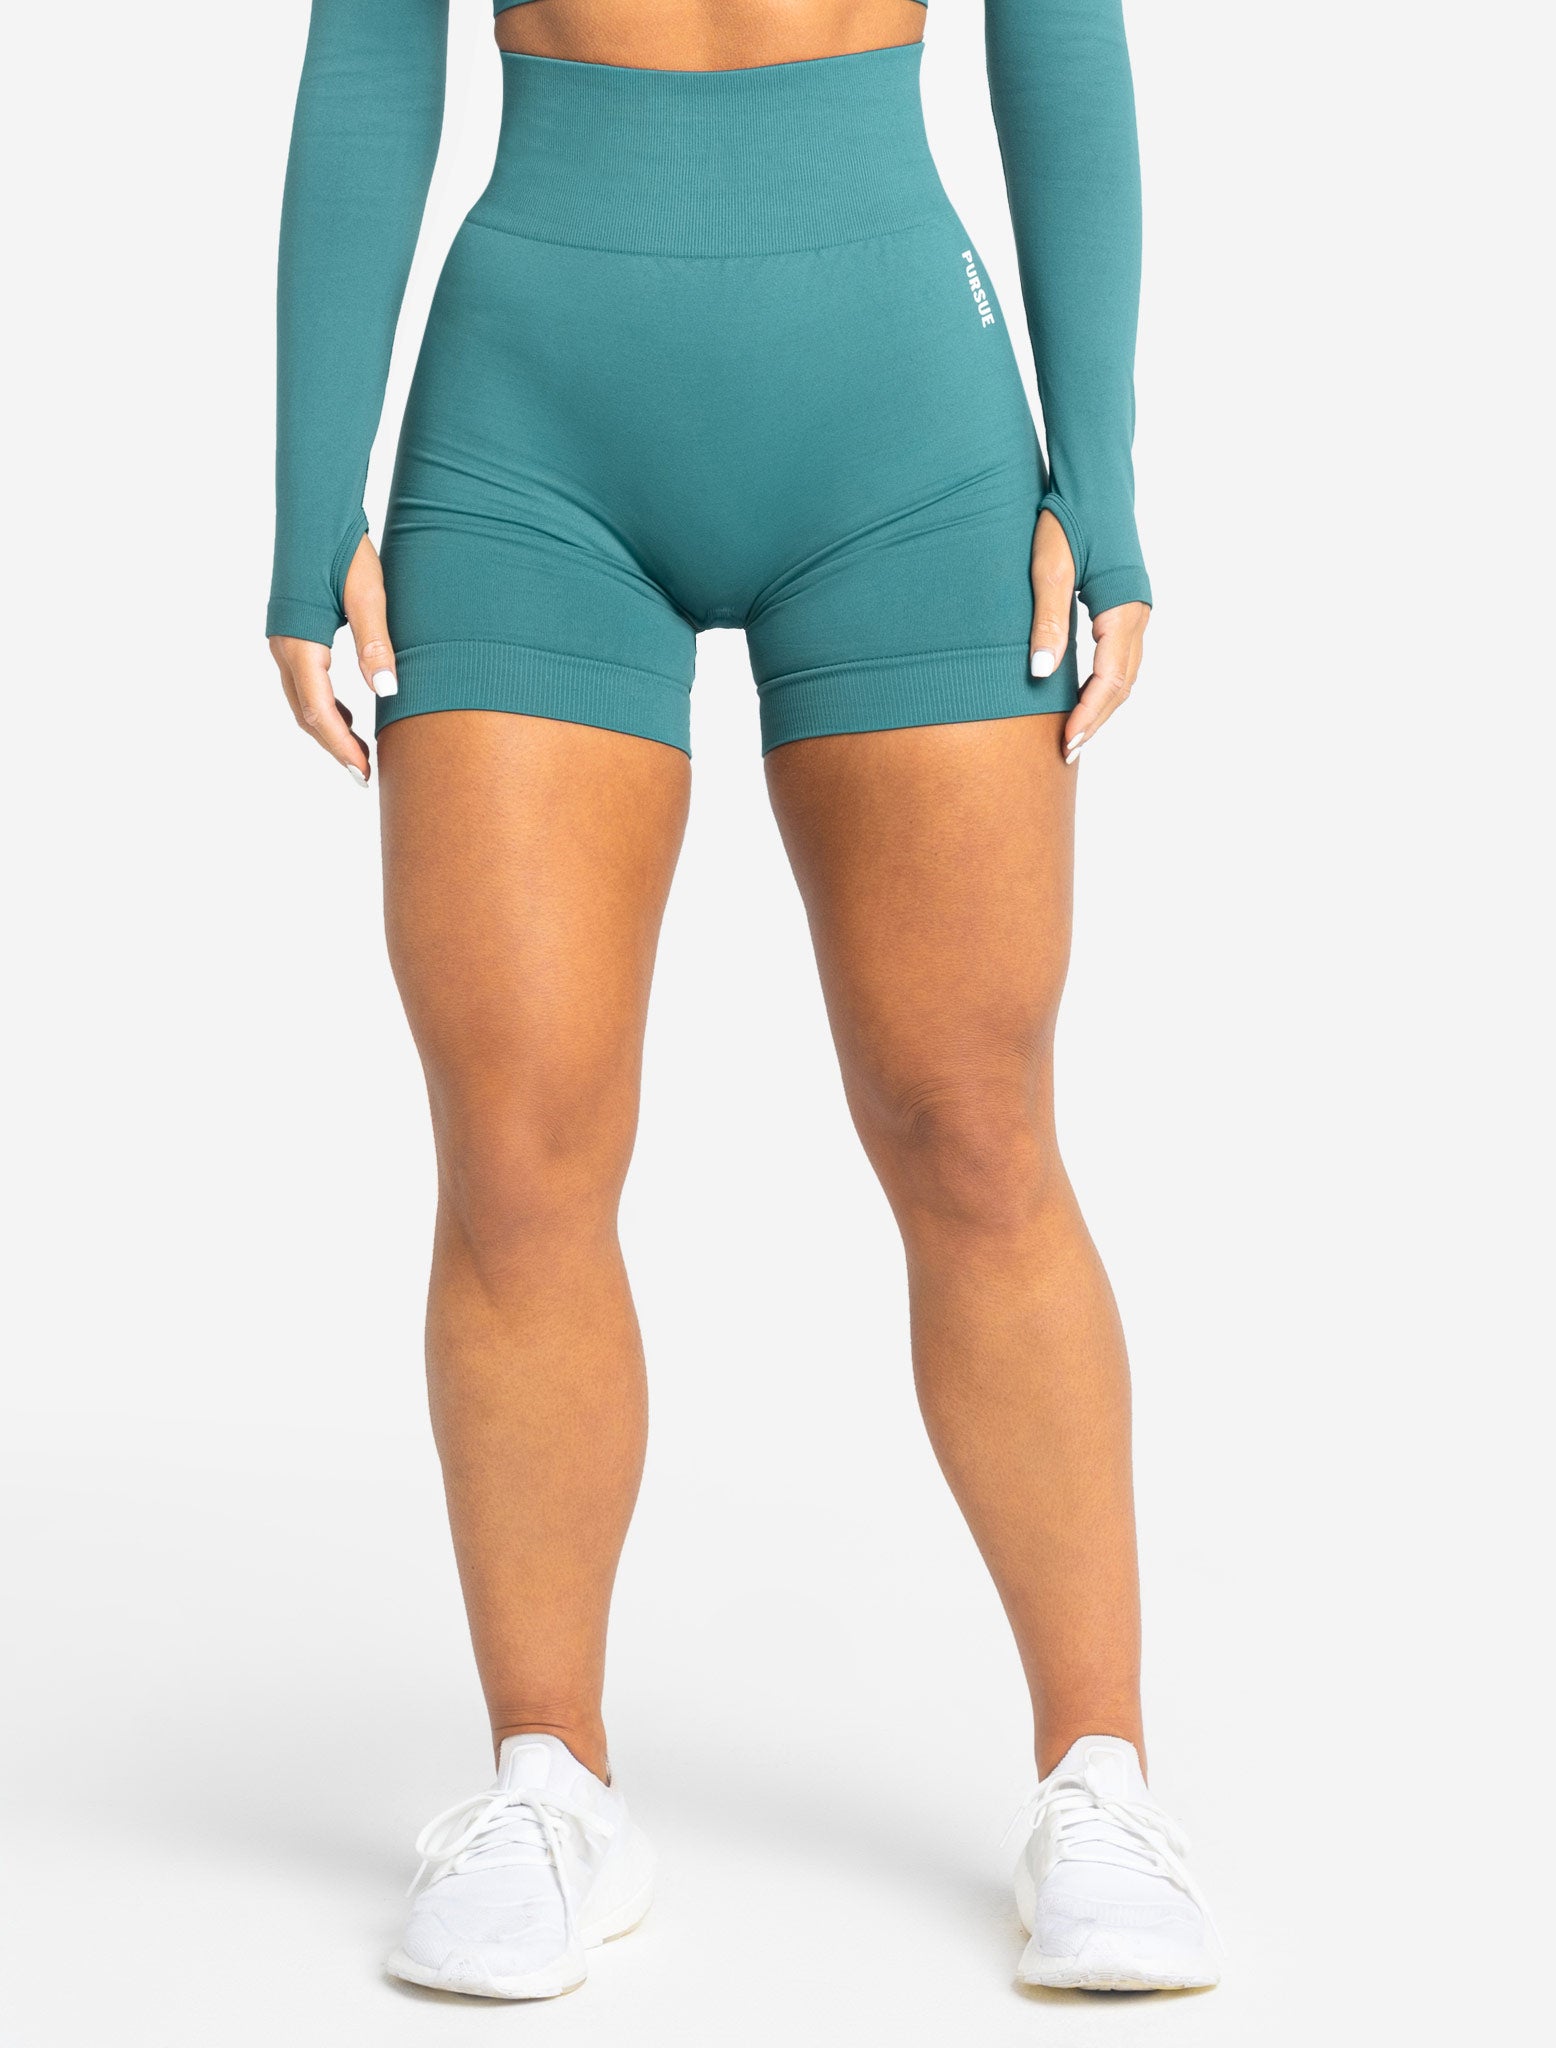 Girls Gym Shorts - Longer Length